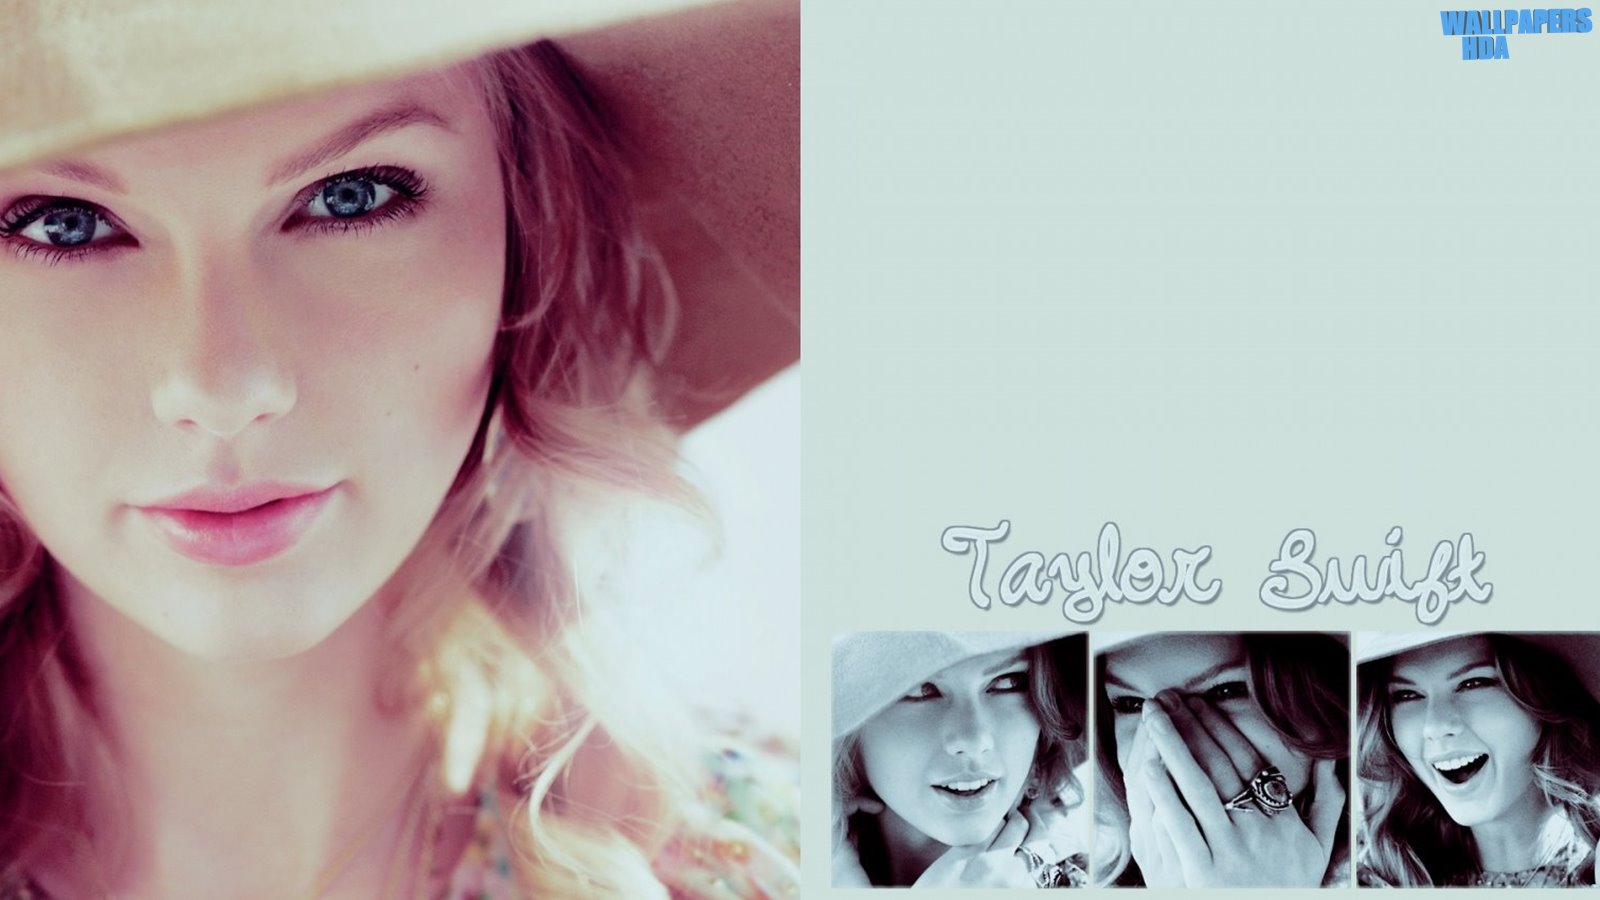 Taylor swift smile wallpaper 1600x900